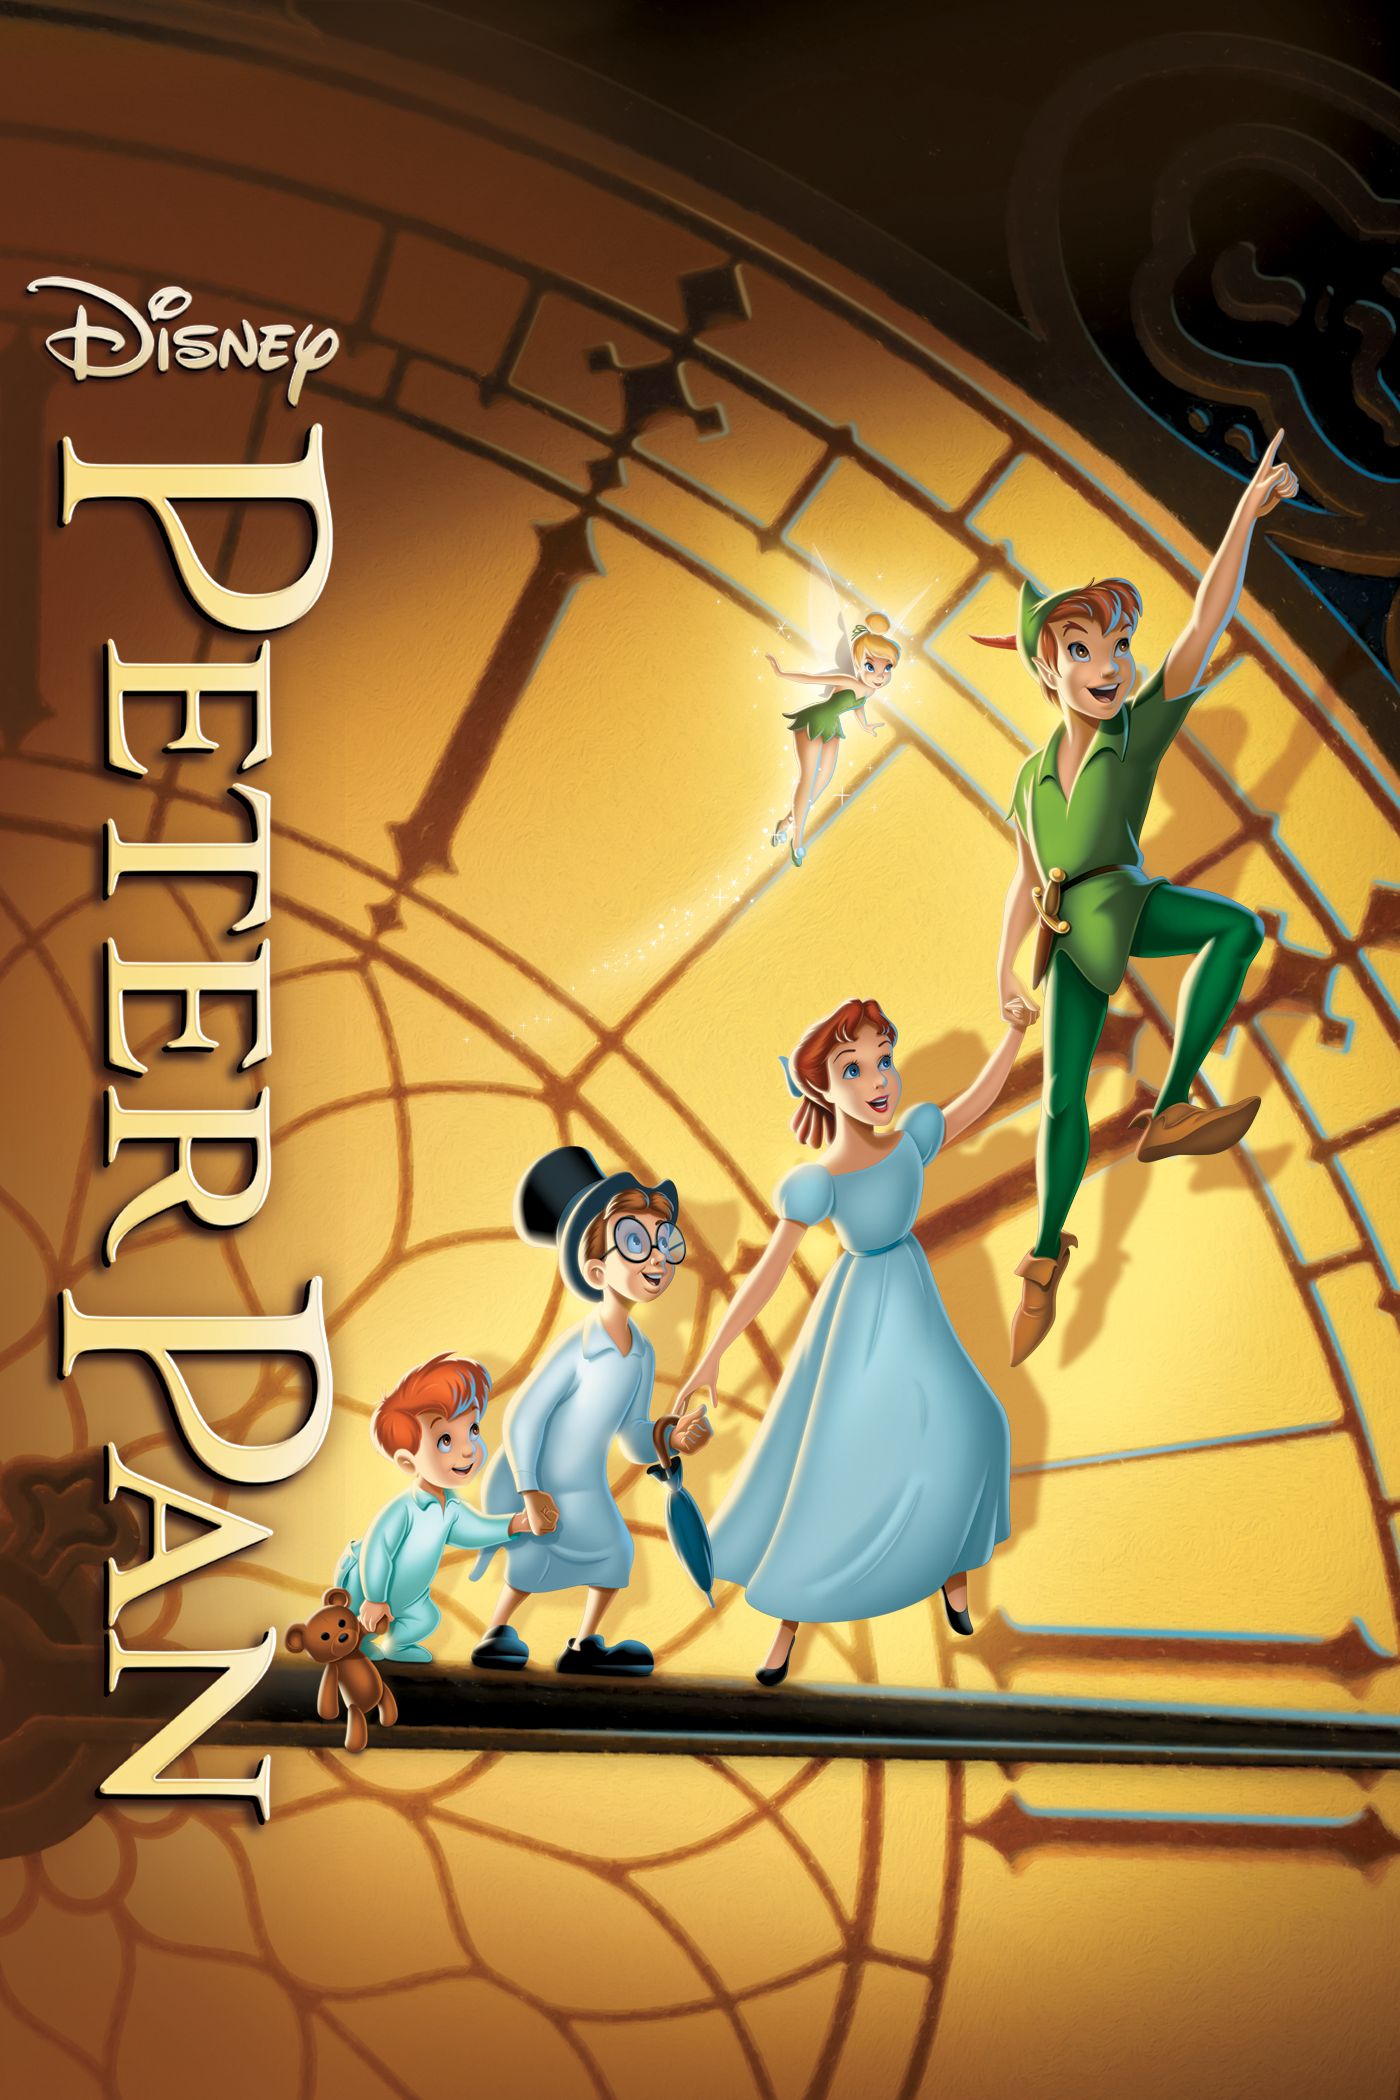 Peter Pan | Movies Anywhere